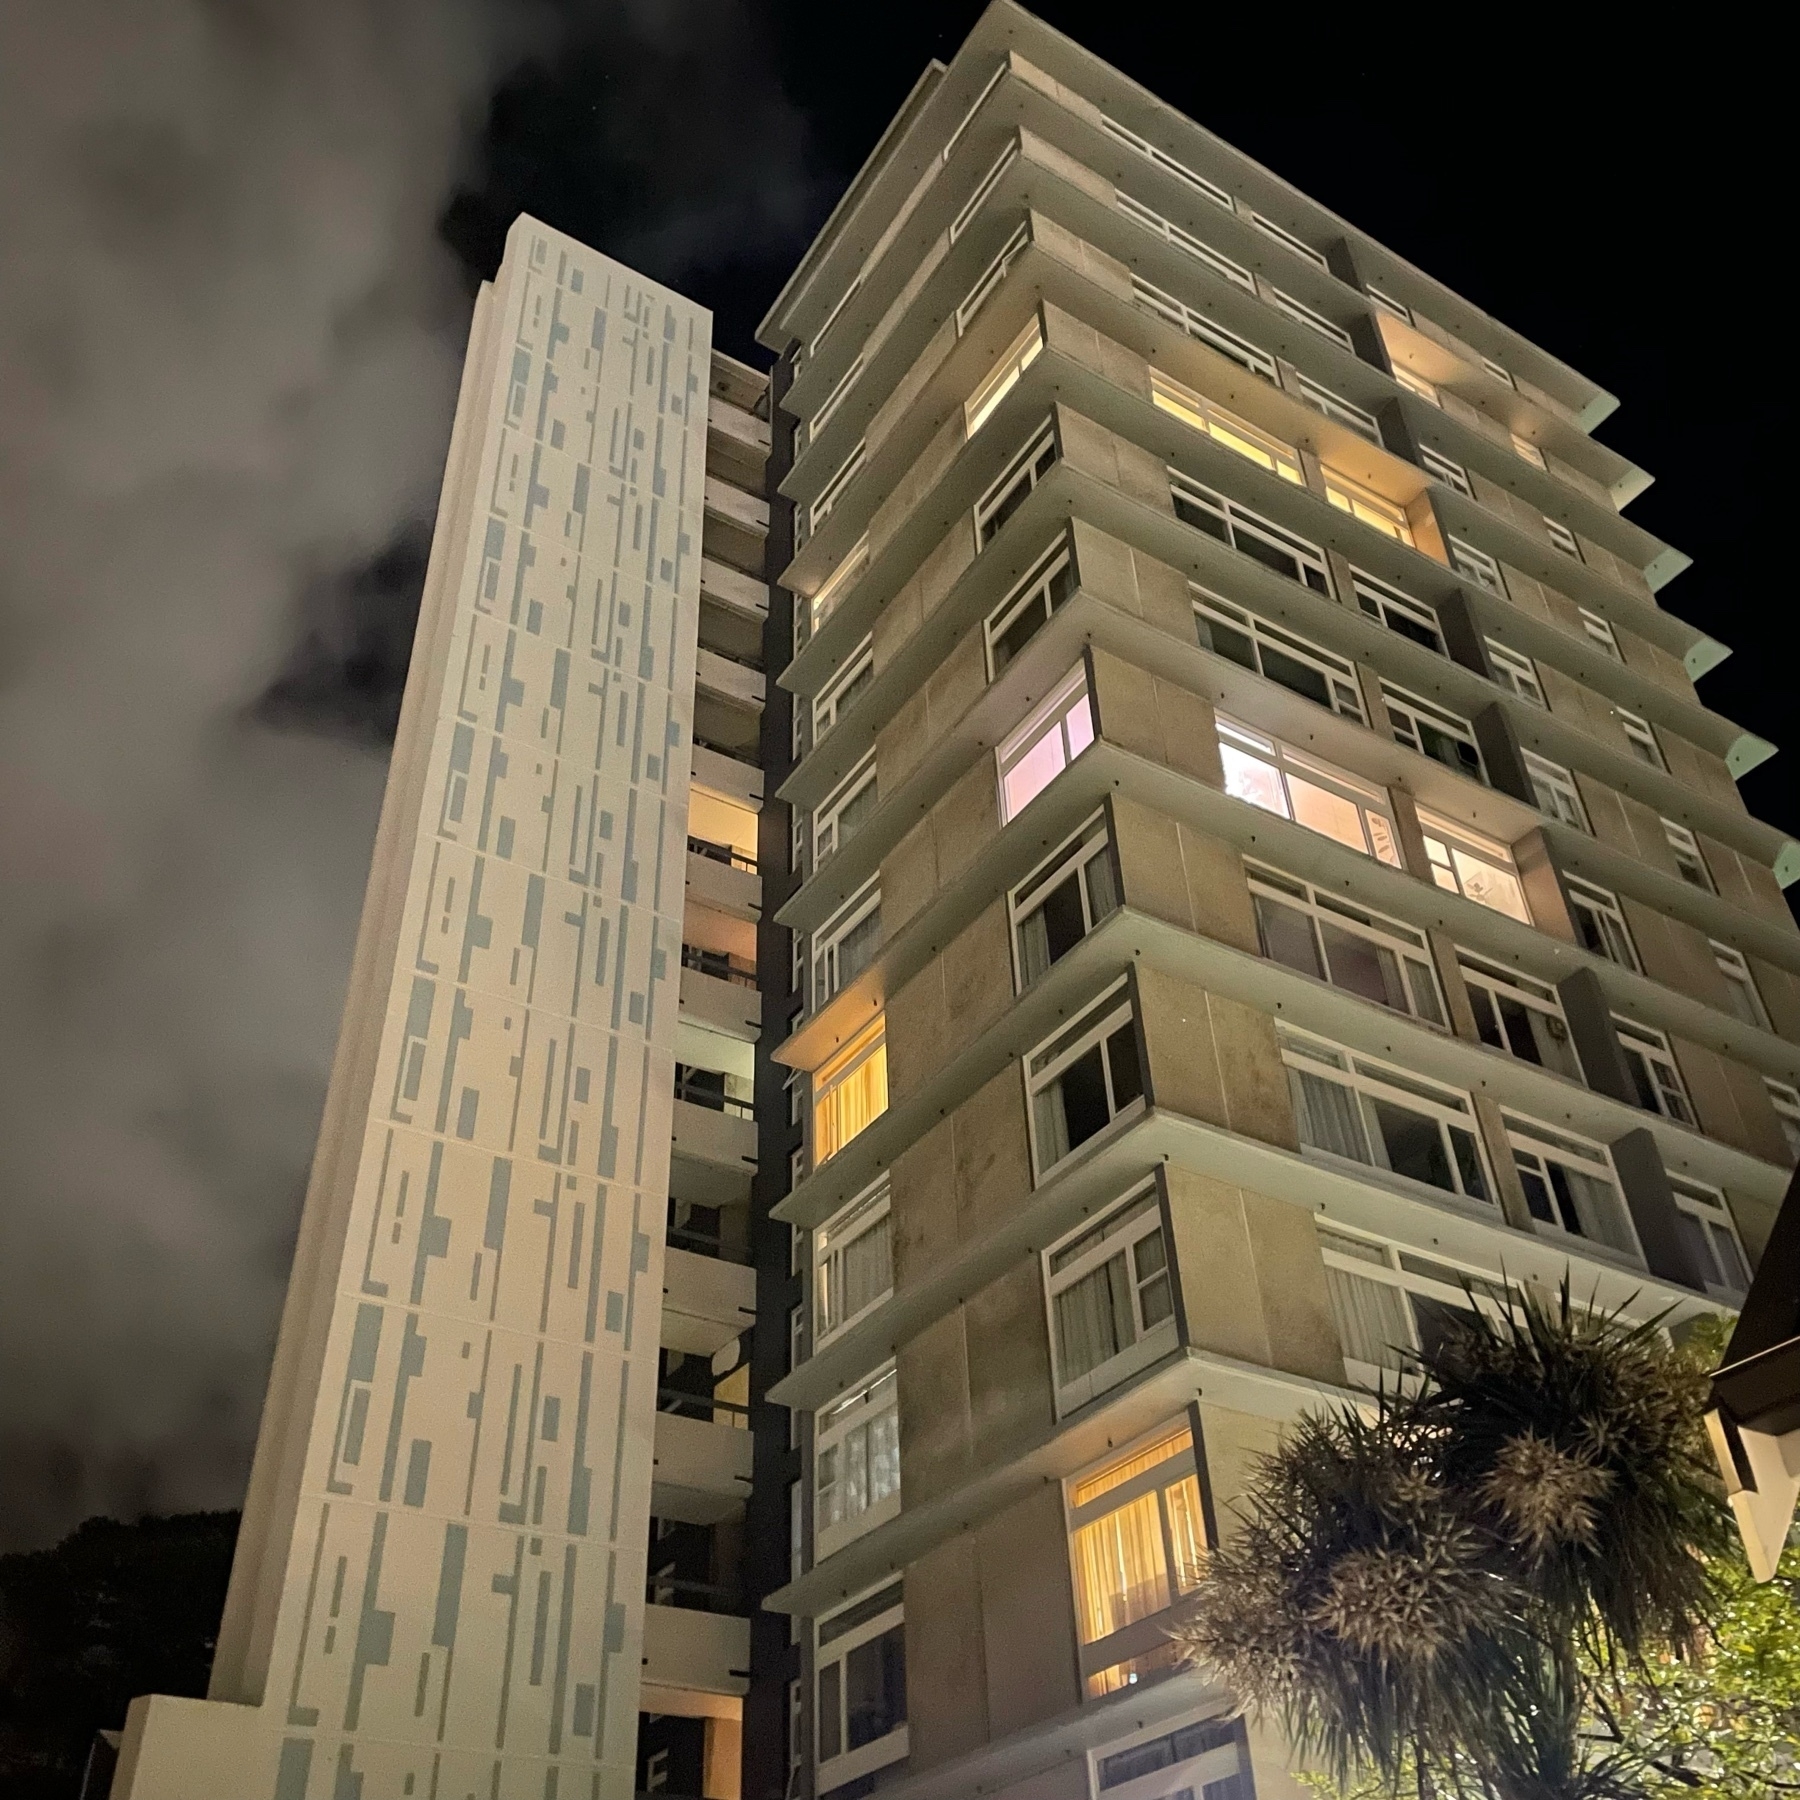 Nighttime view of a modernist tower block. 